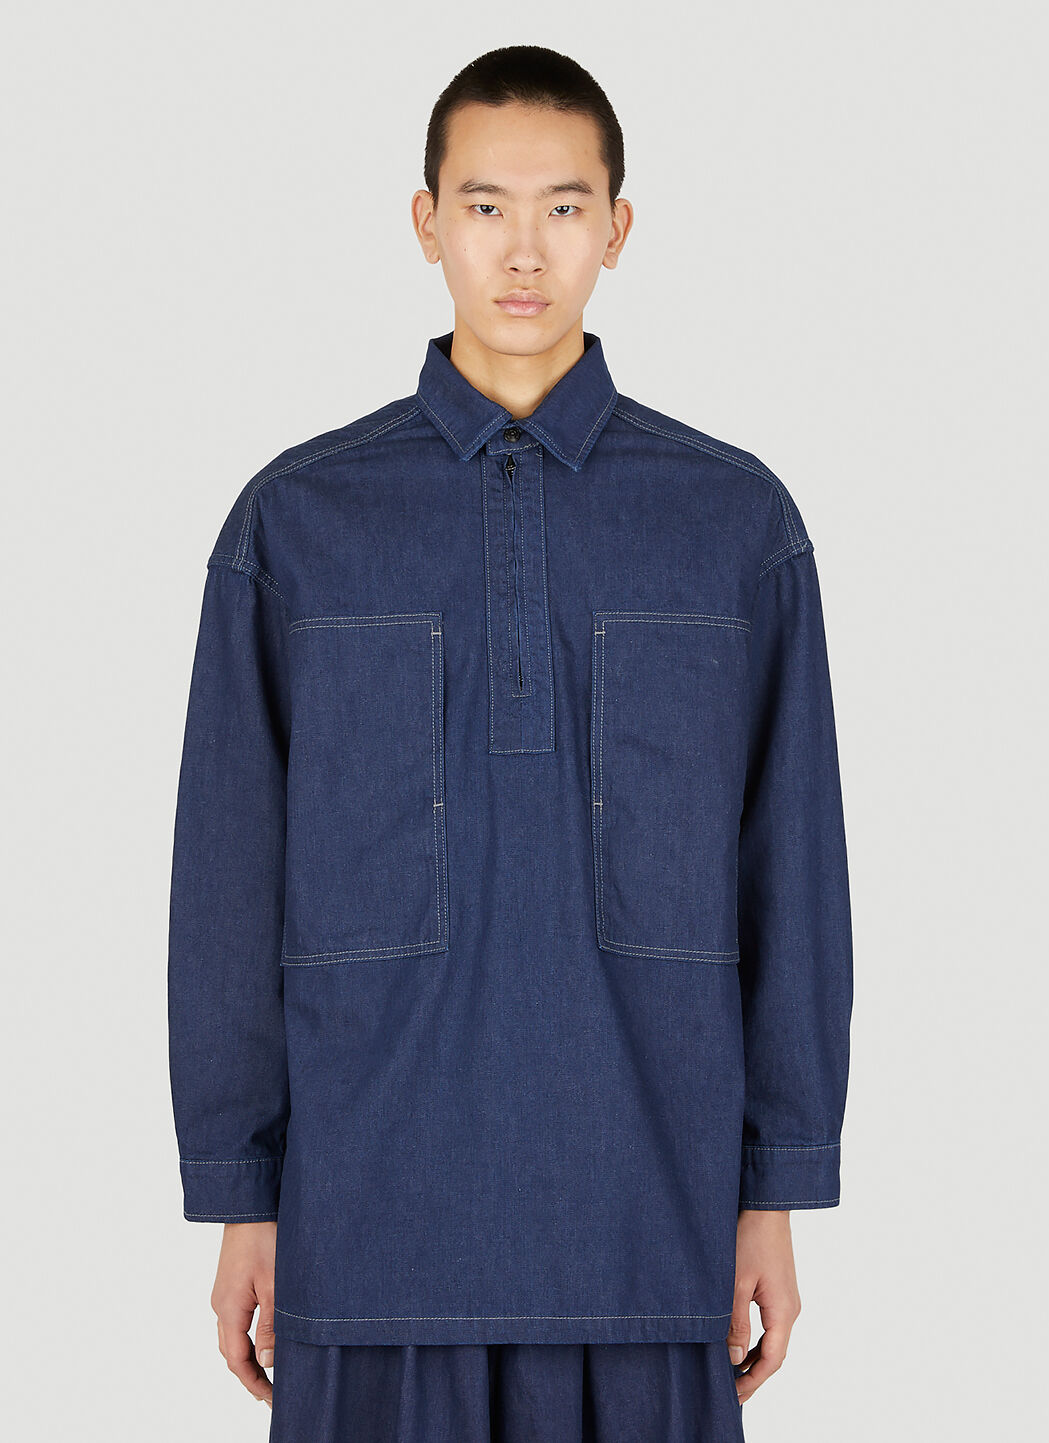 Levi's デニムシャツ ブルー lvs0350005